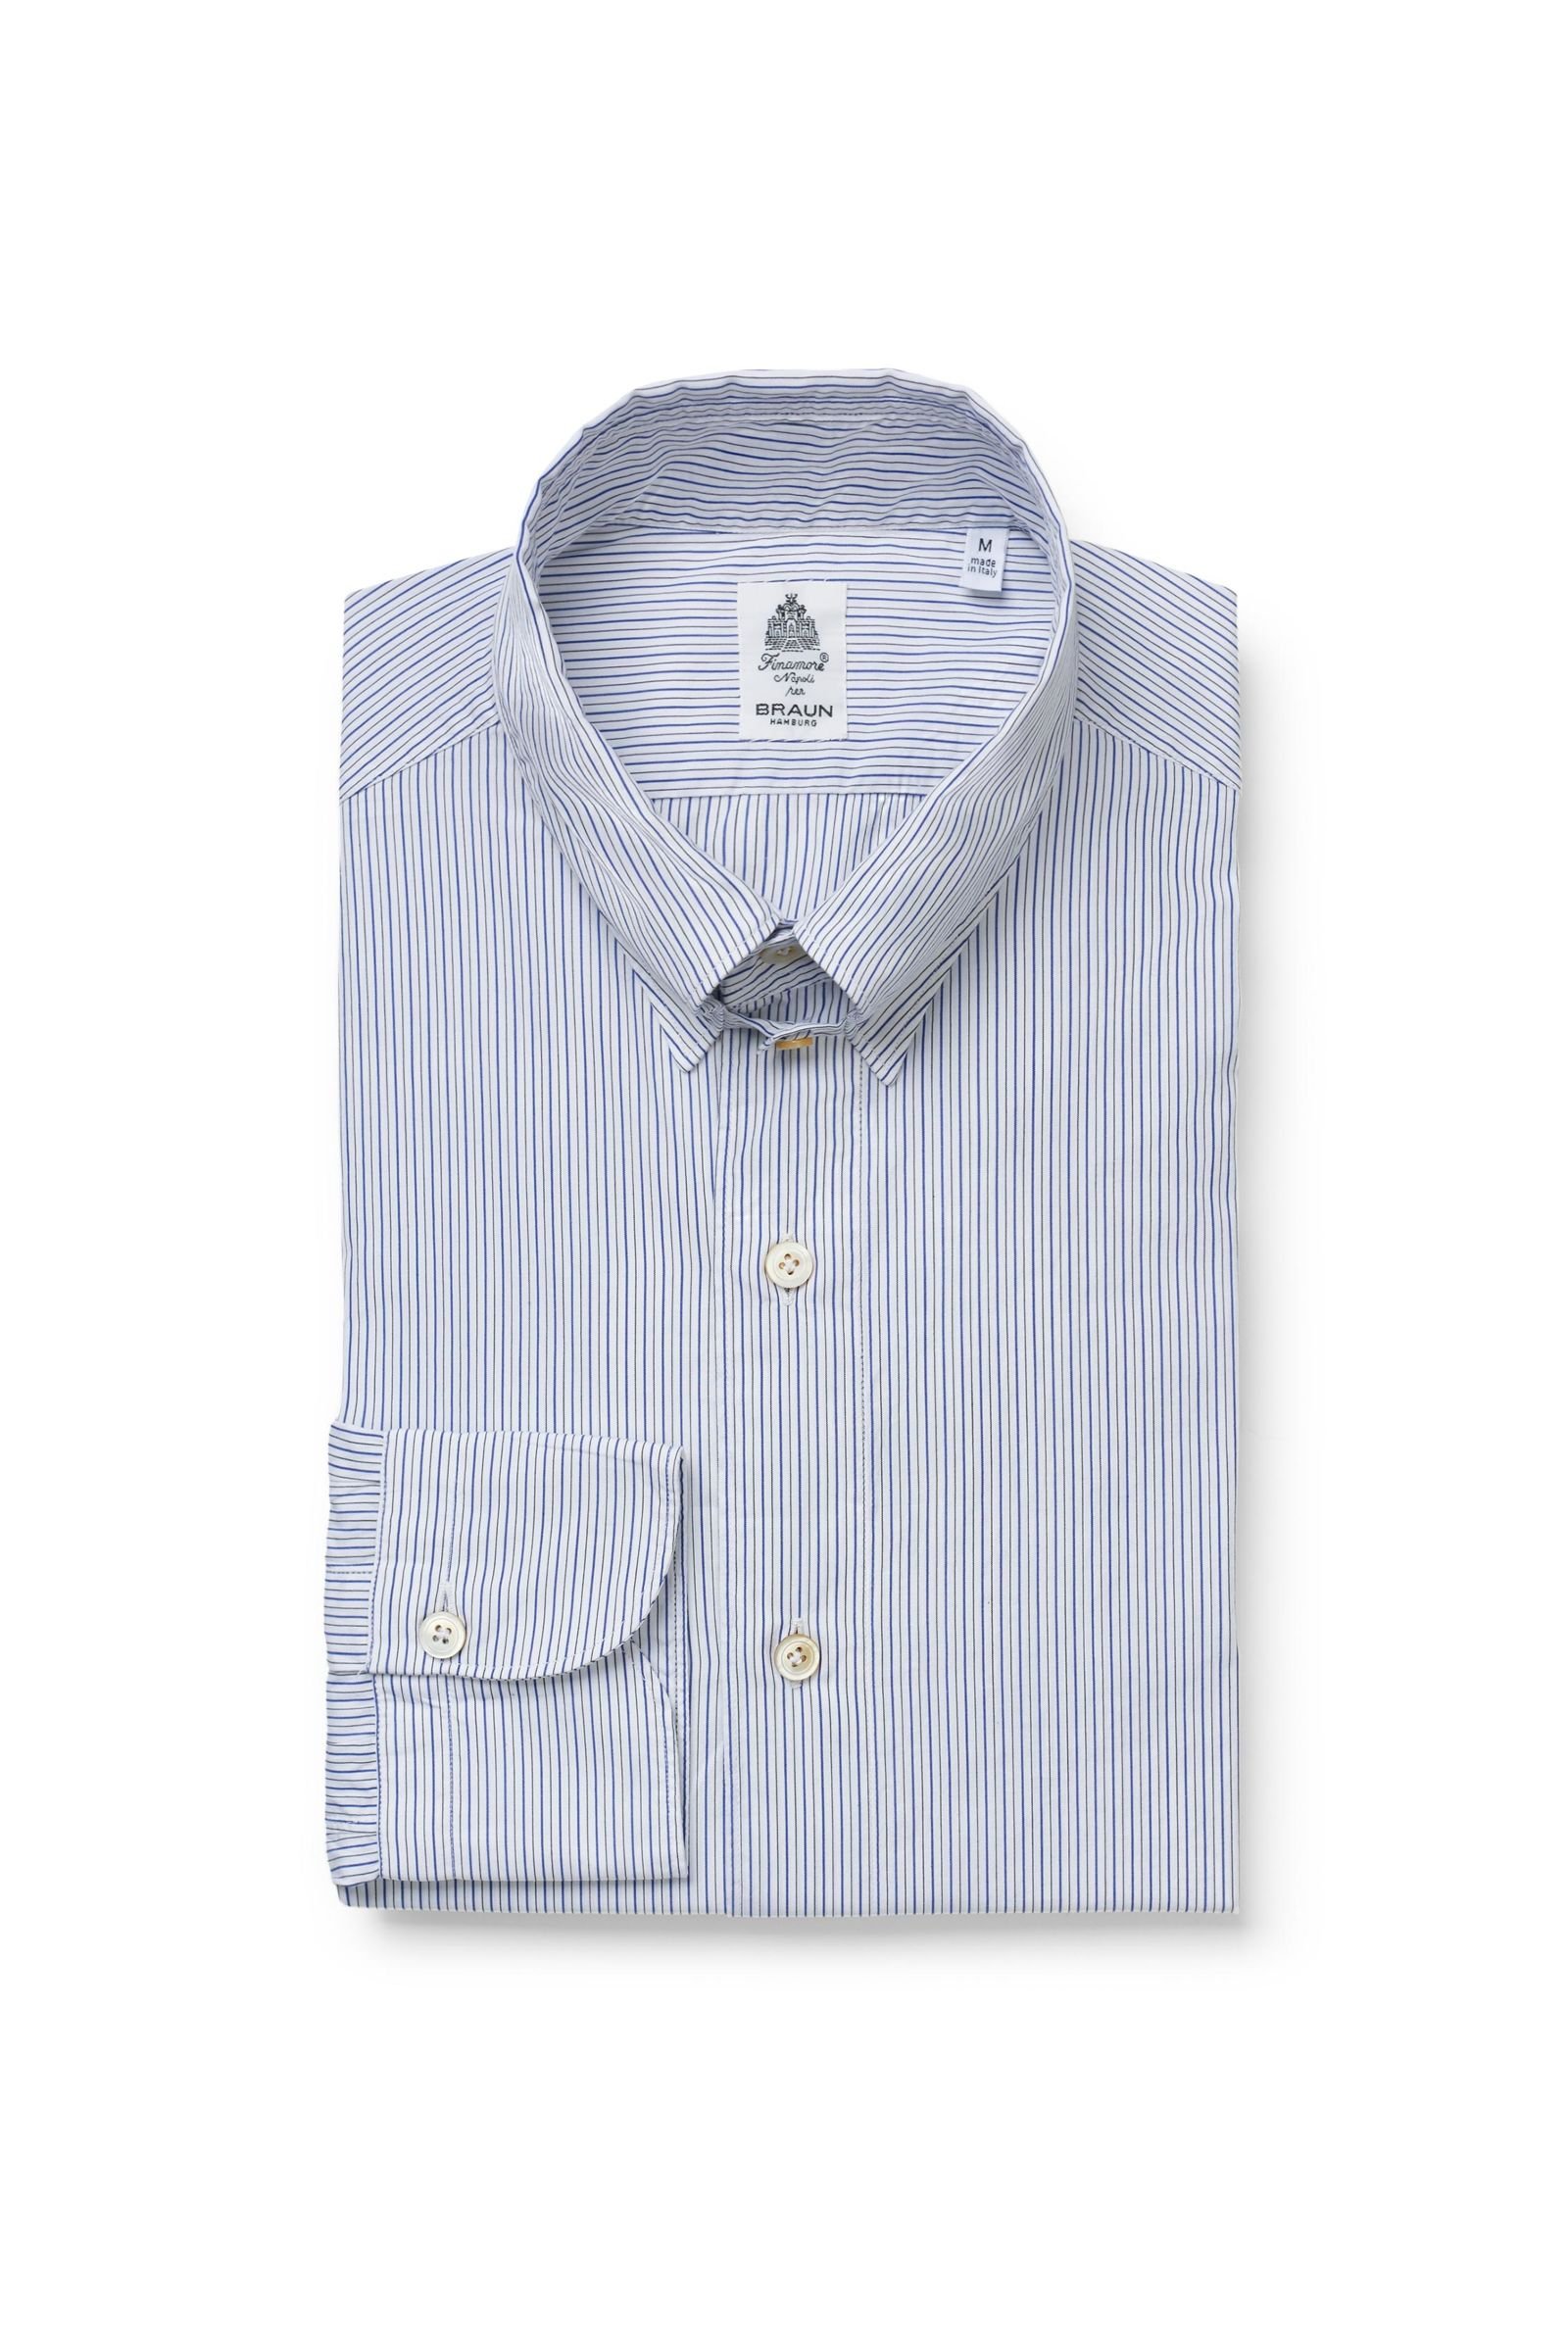 Casual shirt 'Augusto Tokyo' English collar dark blue/white striped